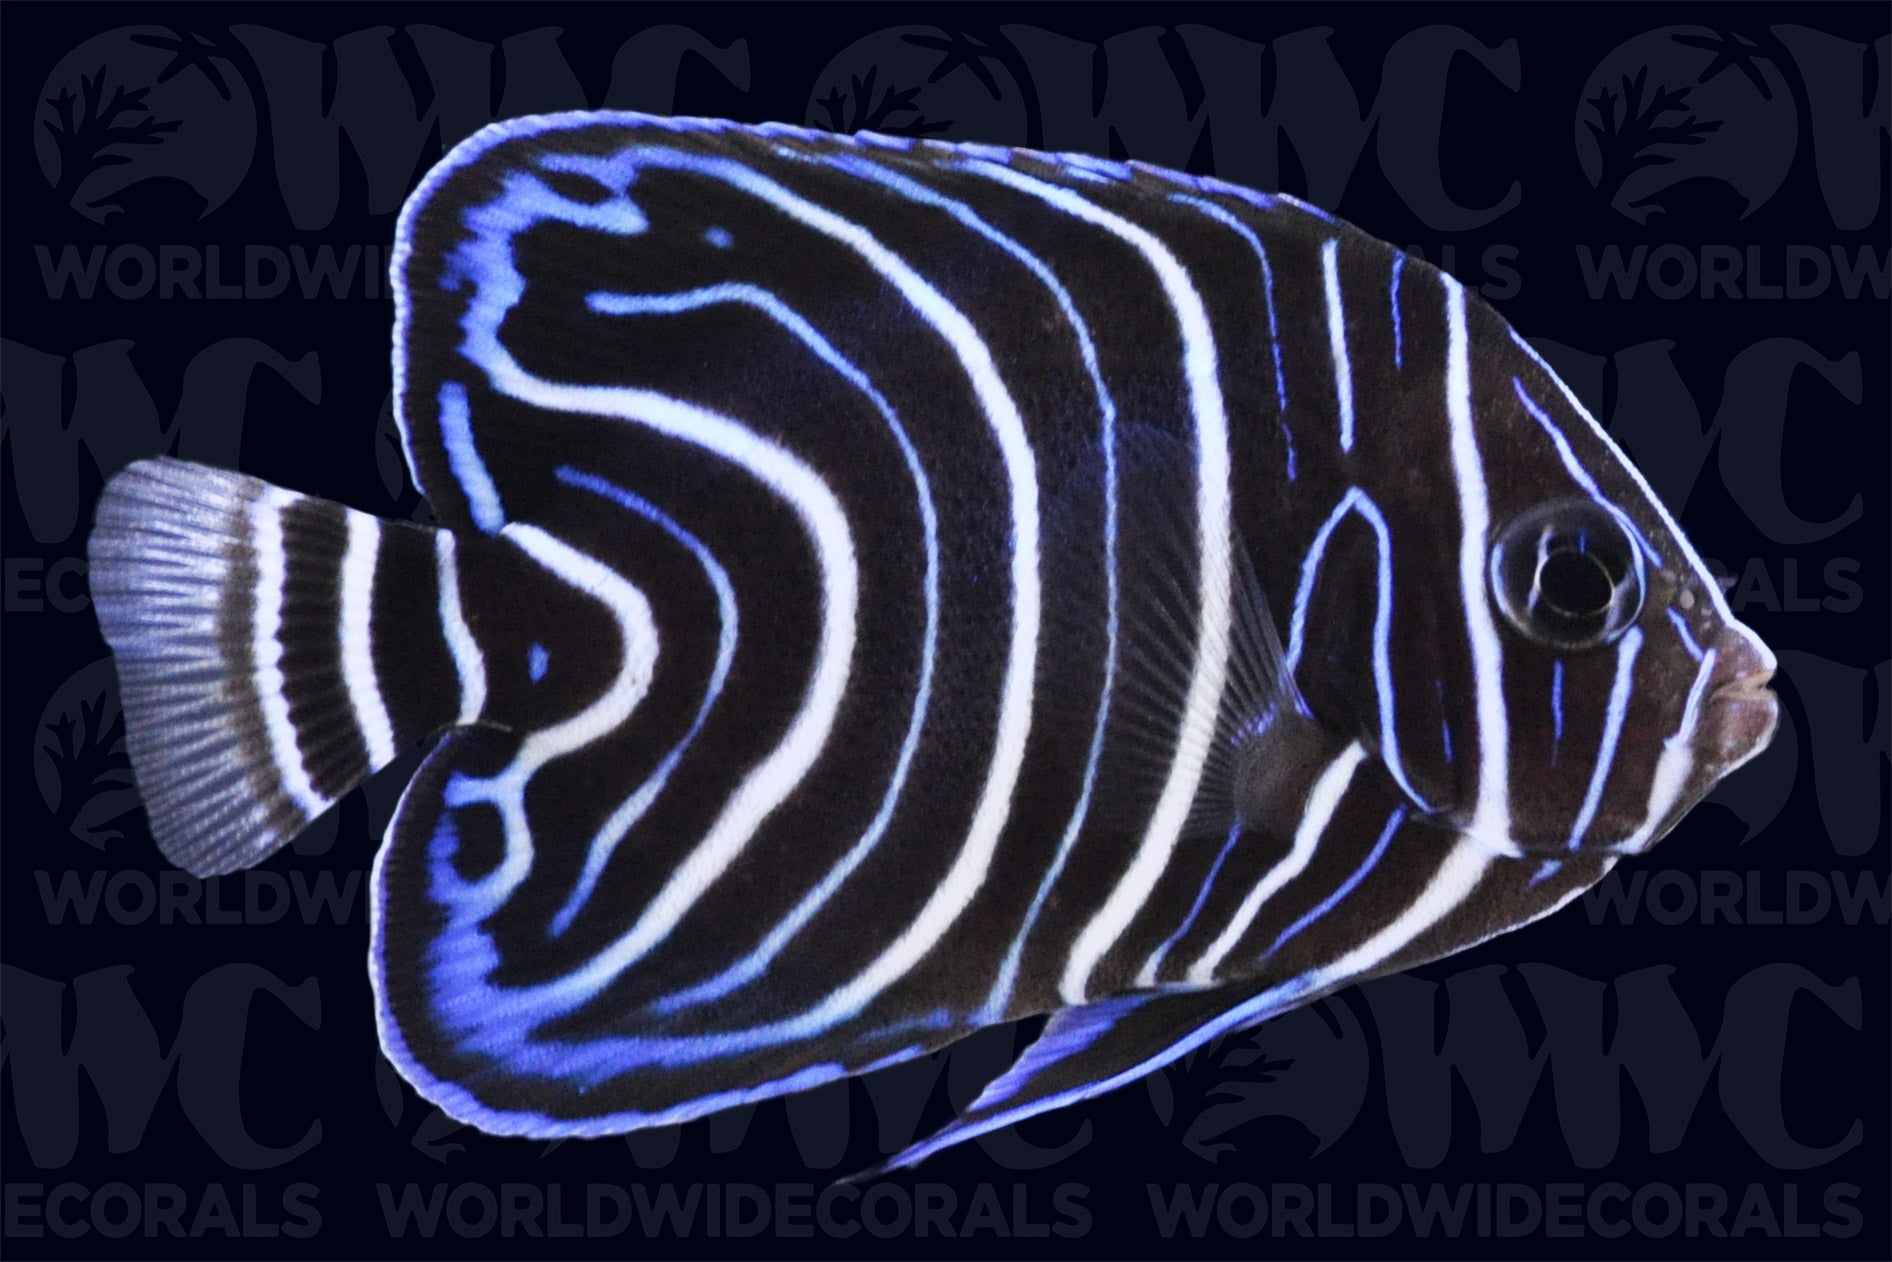 blue striped angelfish